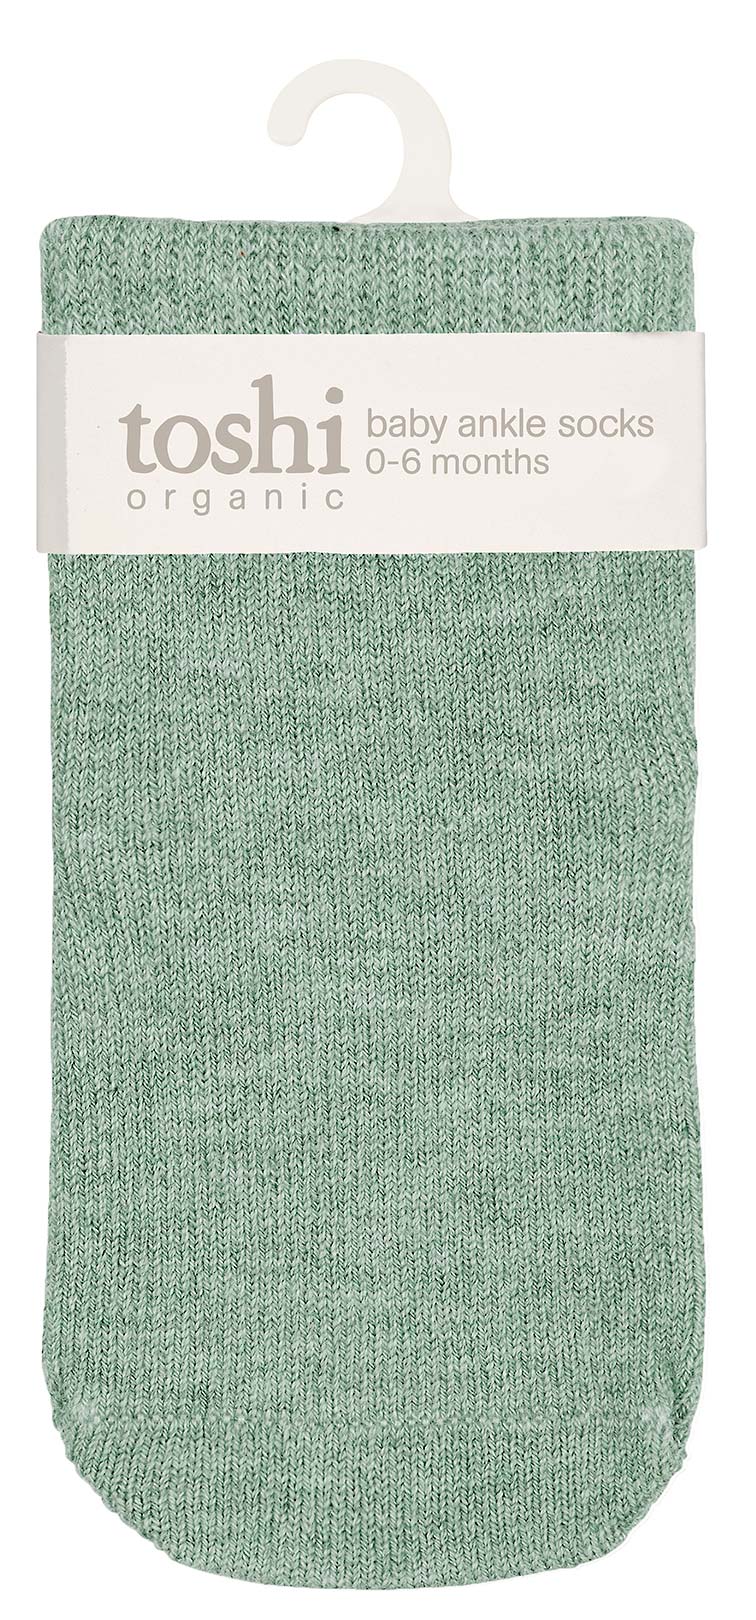 Organic Dreamtime Ankle Socks - Jade Socks Toshi 